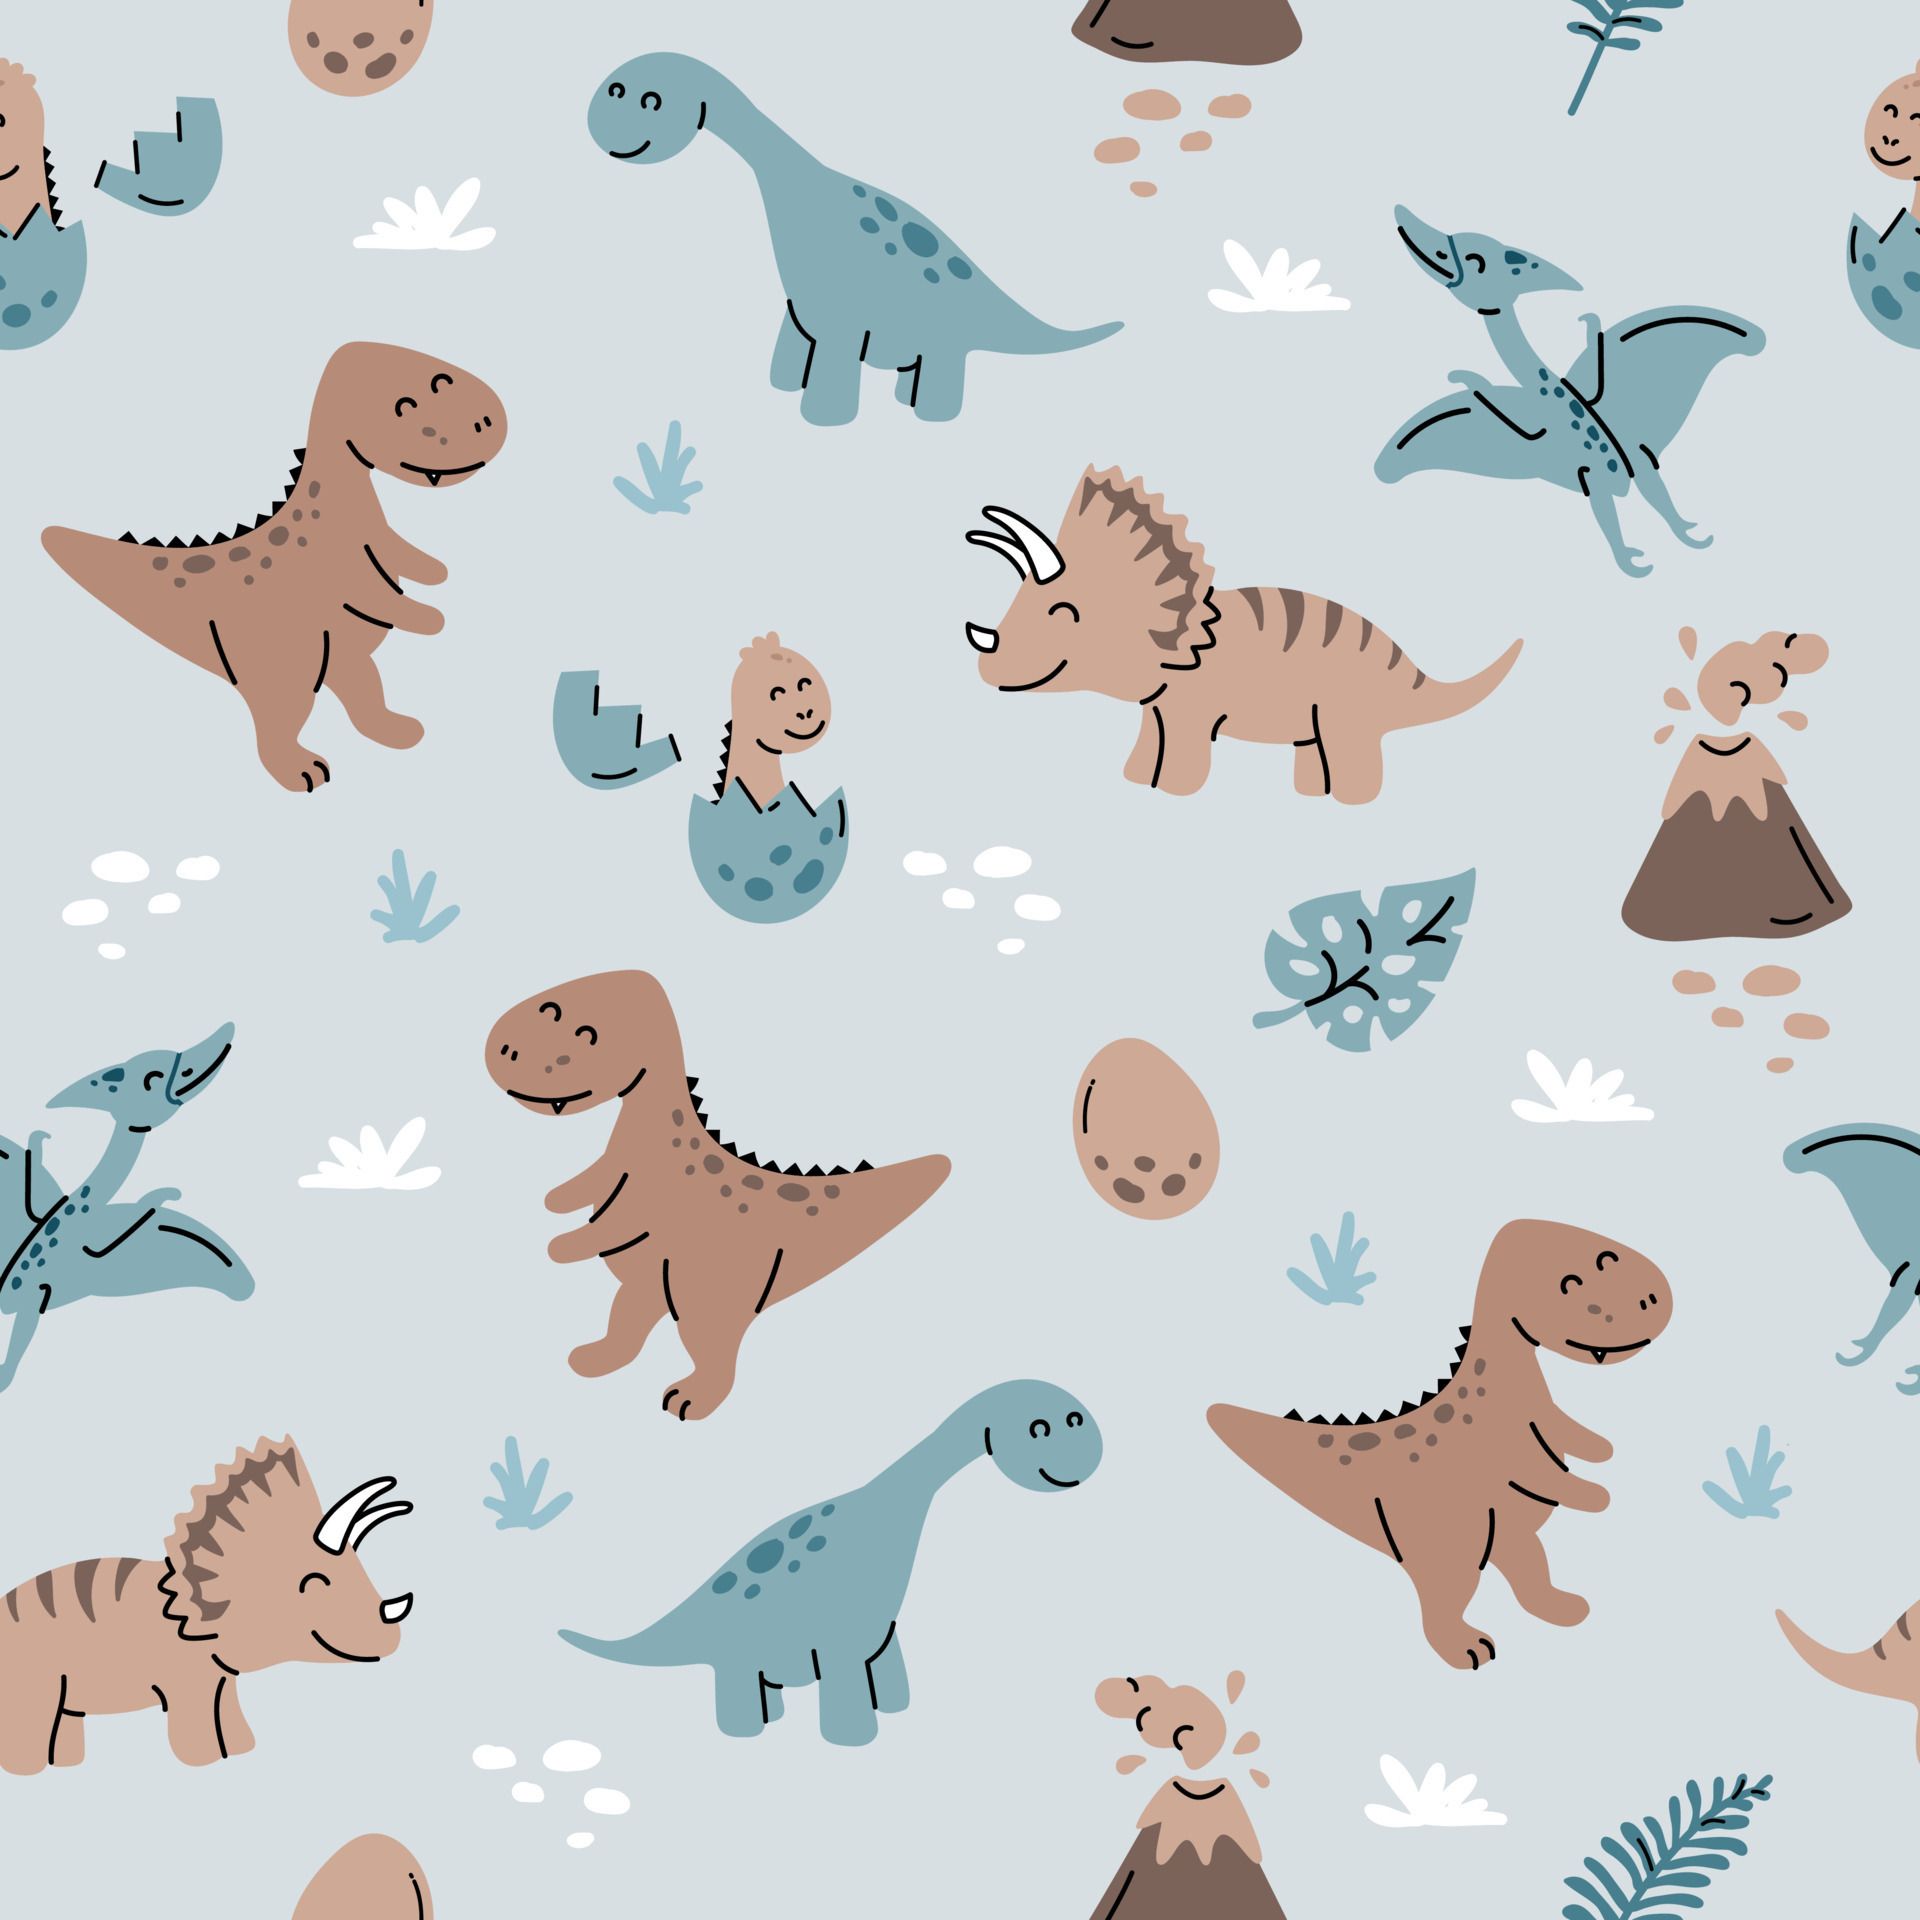 Dinosaurs seamless pattern in cartoon scandinavian style